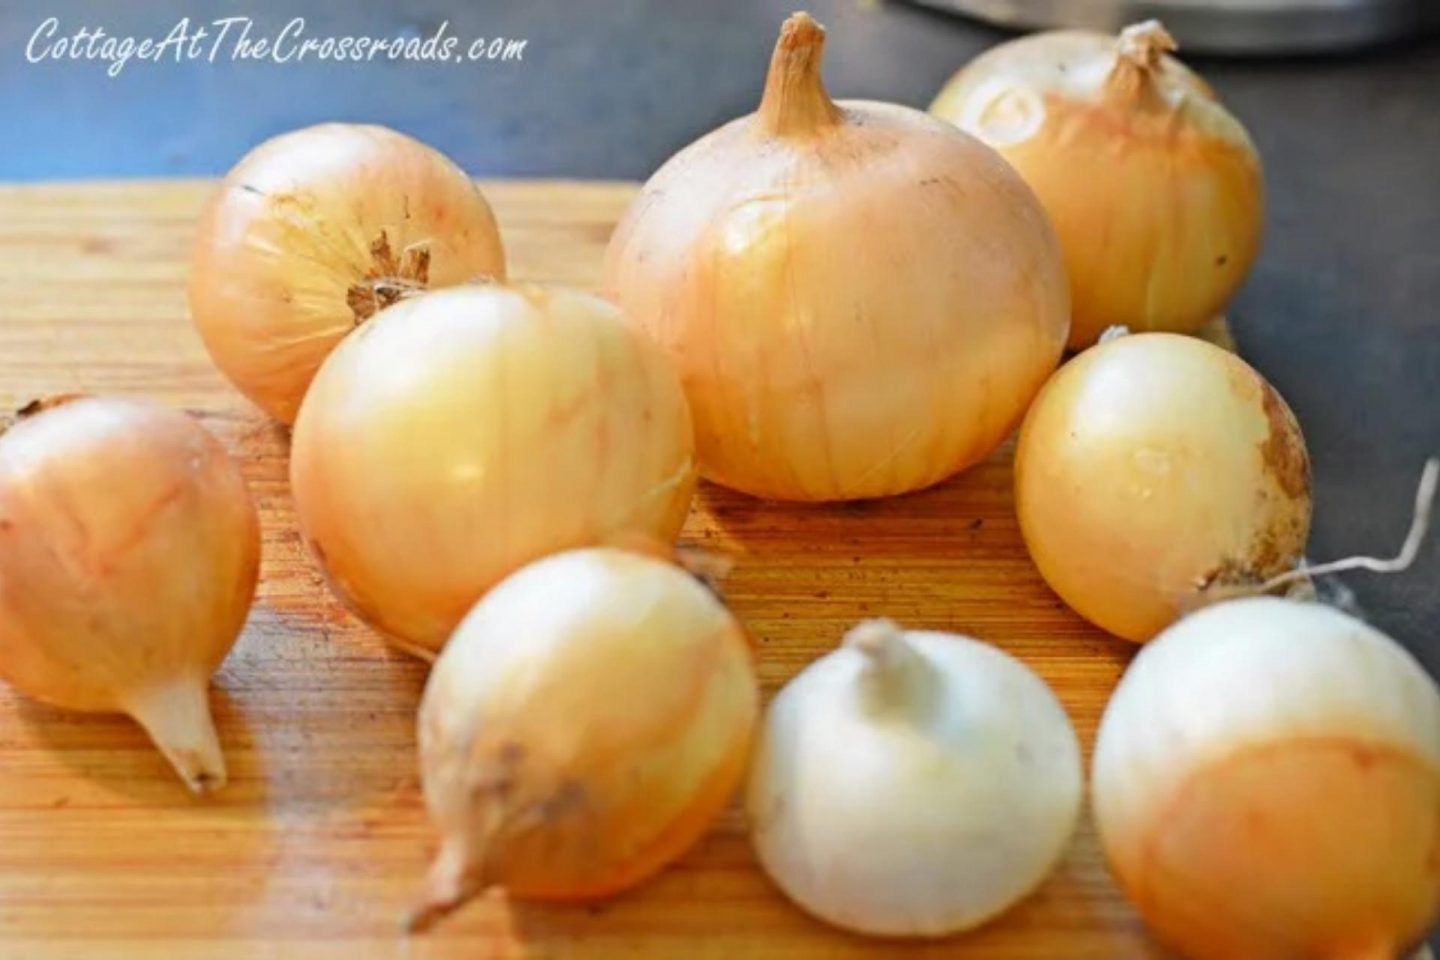 Large onions